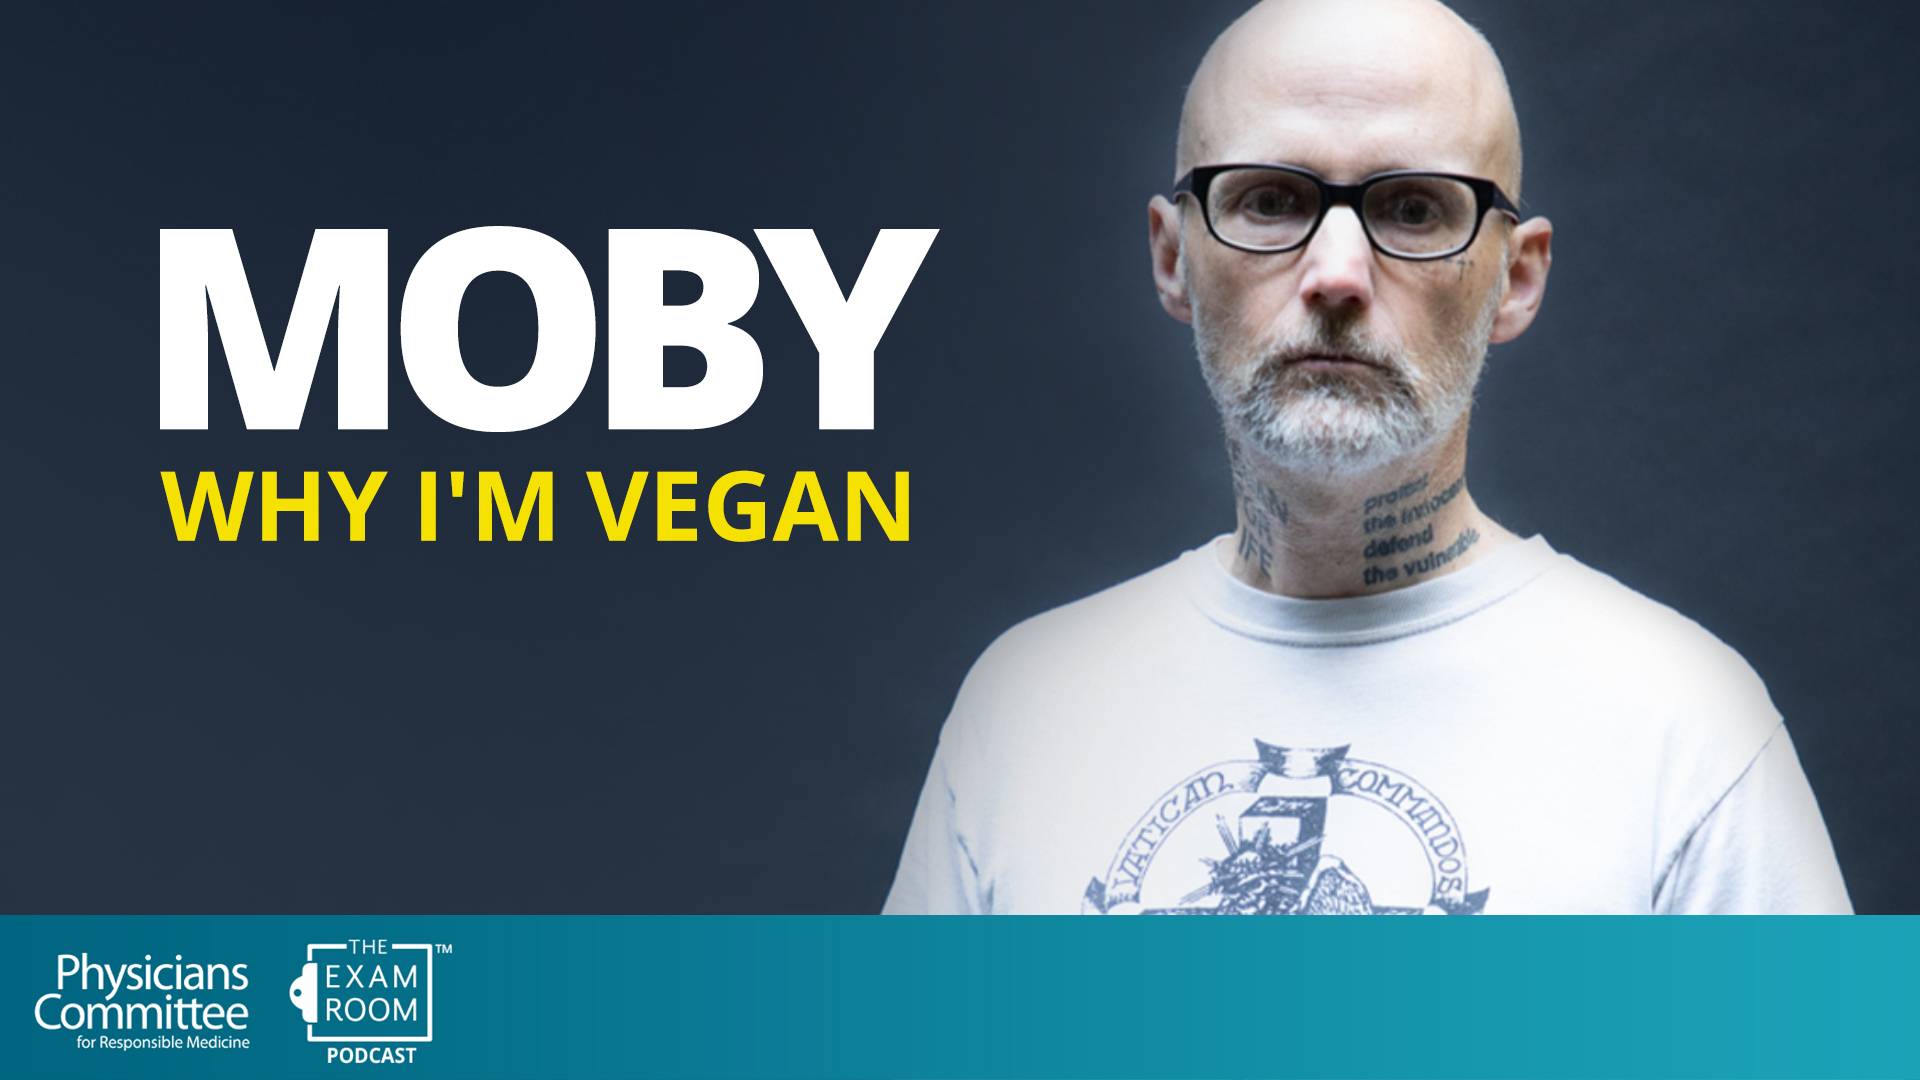 Moby: The Heartwarming Reason I'm Vegan